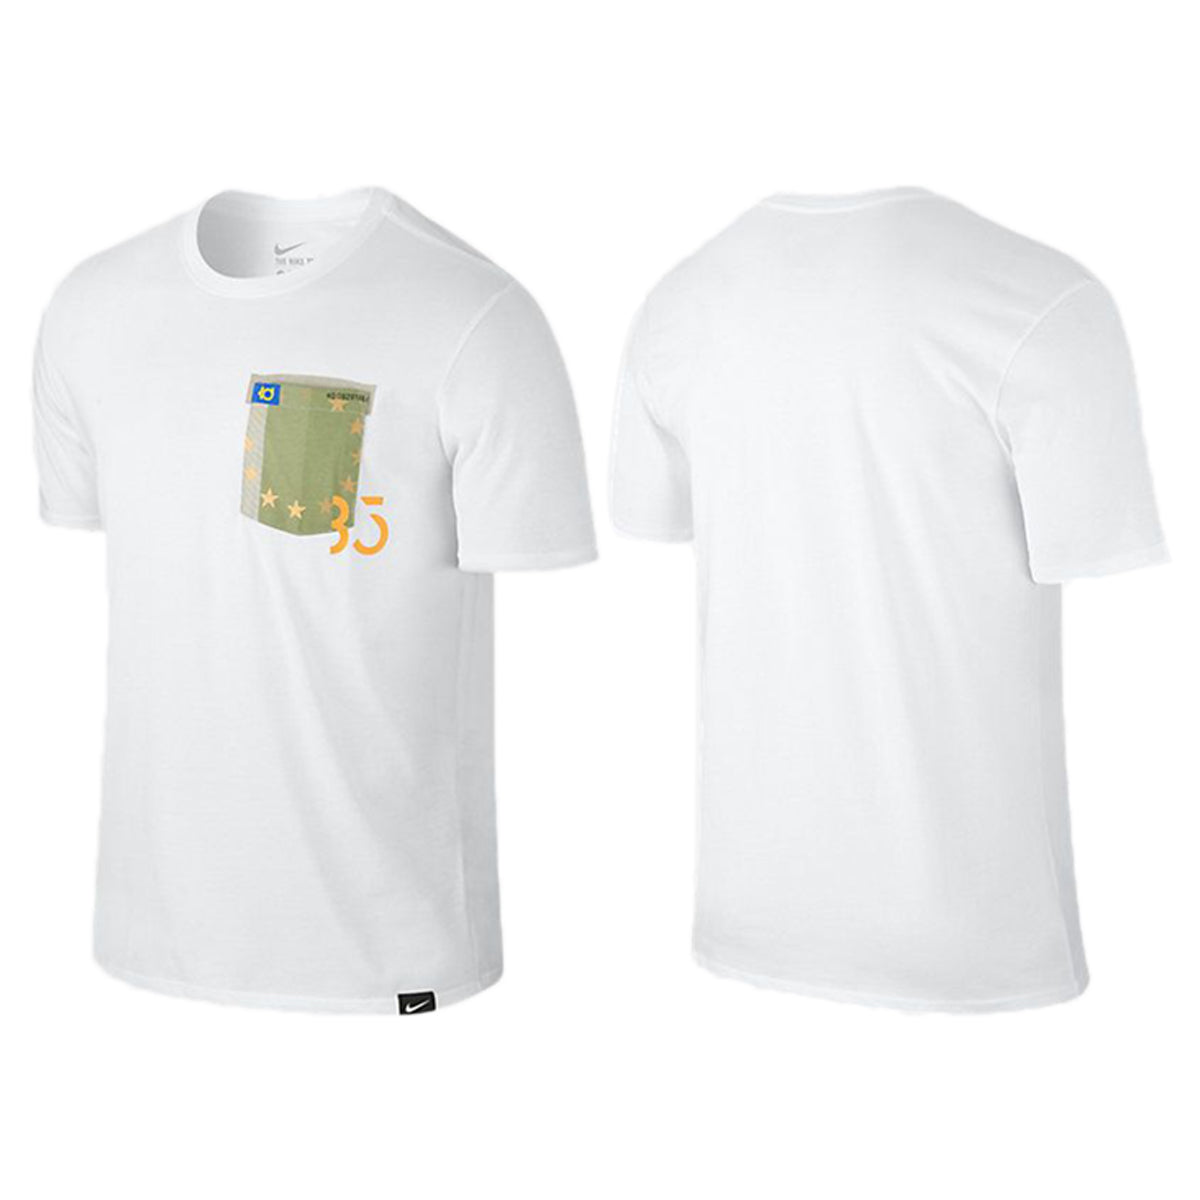 Nike Kd 8 Ho2 Pocket Dri-fit T-shirt  Mens Style : 779205